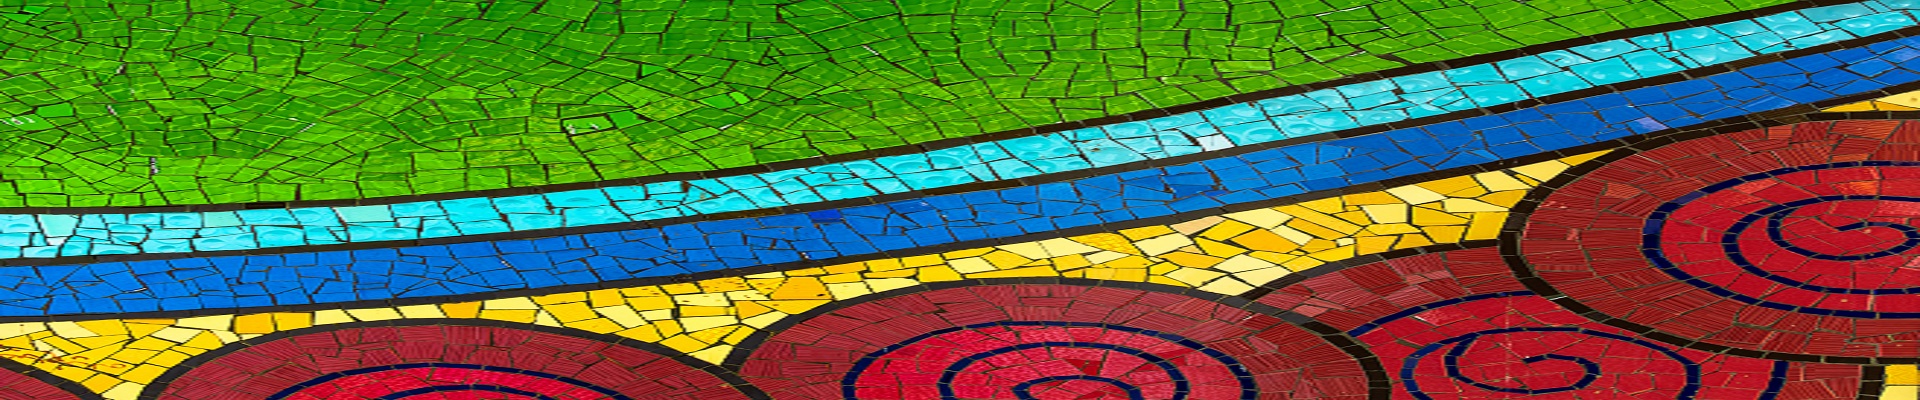 colorful tiled artwork